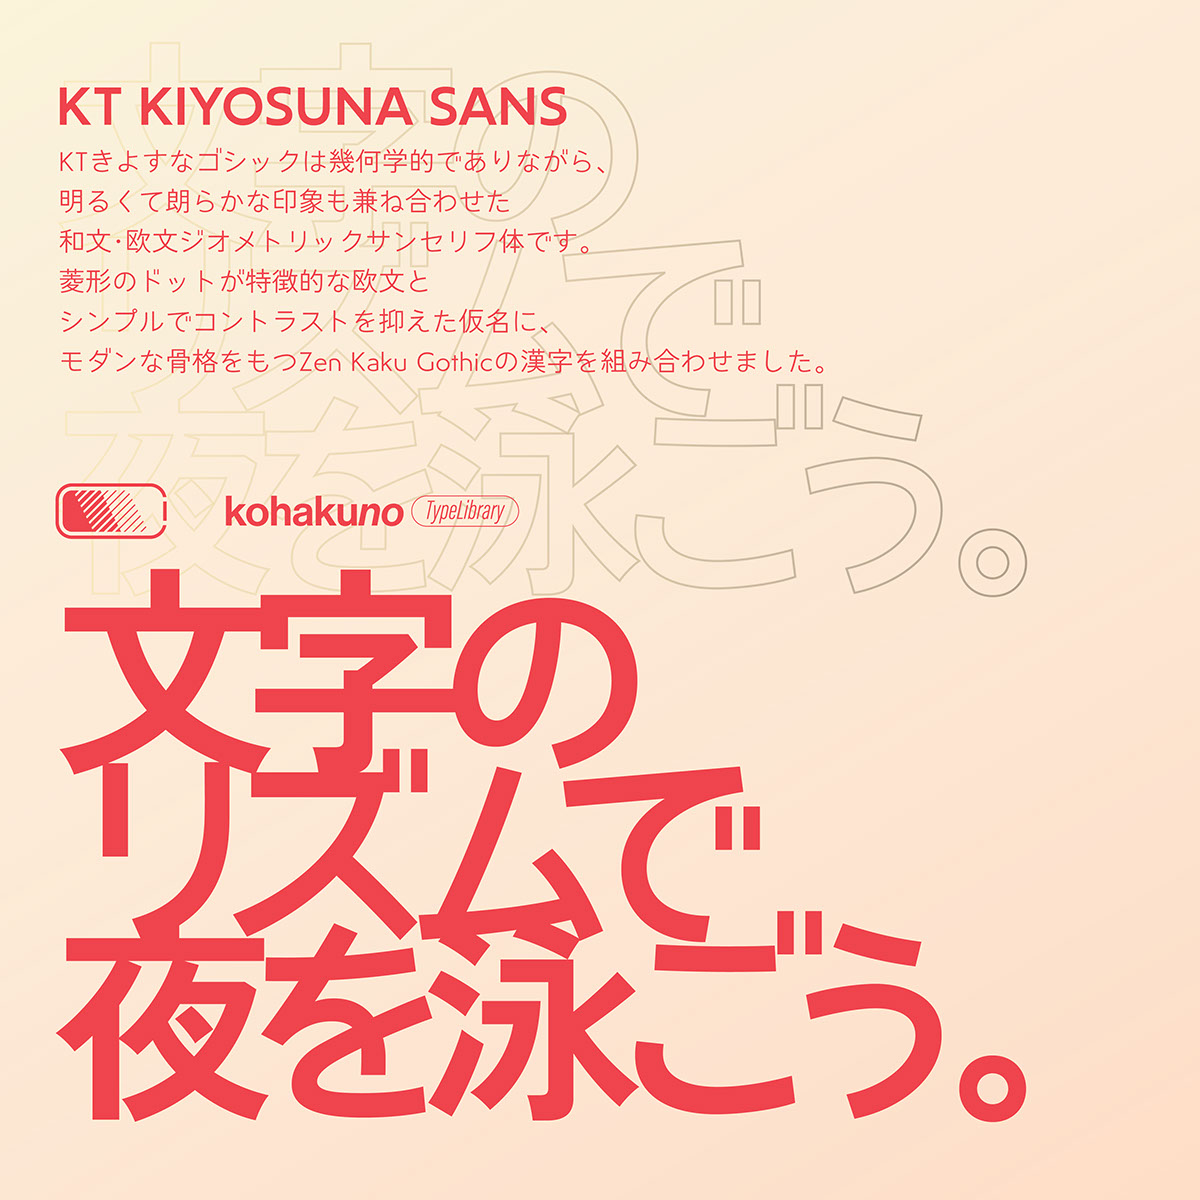 Kiyosuna Sans v1-0-1 rendition image